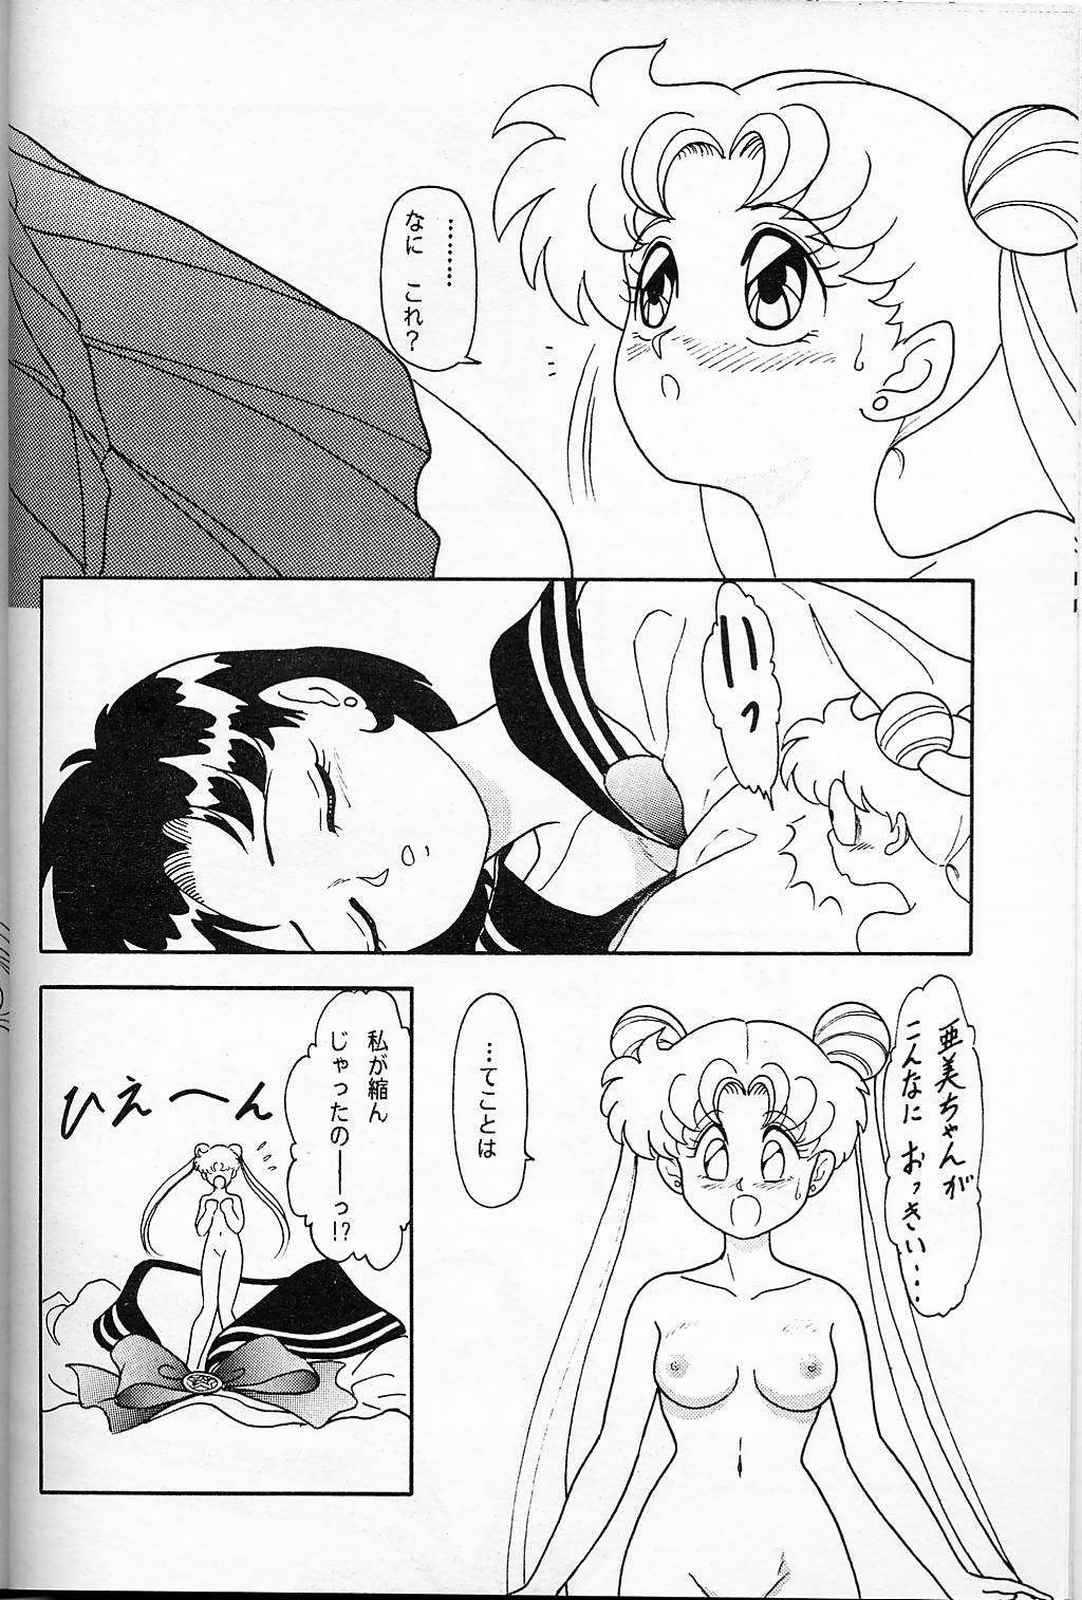 [Lunch Box] 6-Usagi (Sailor Moon) 